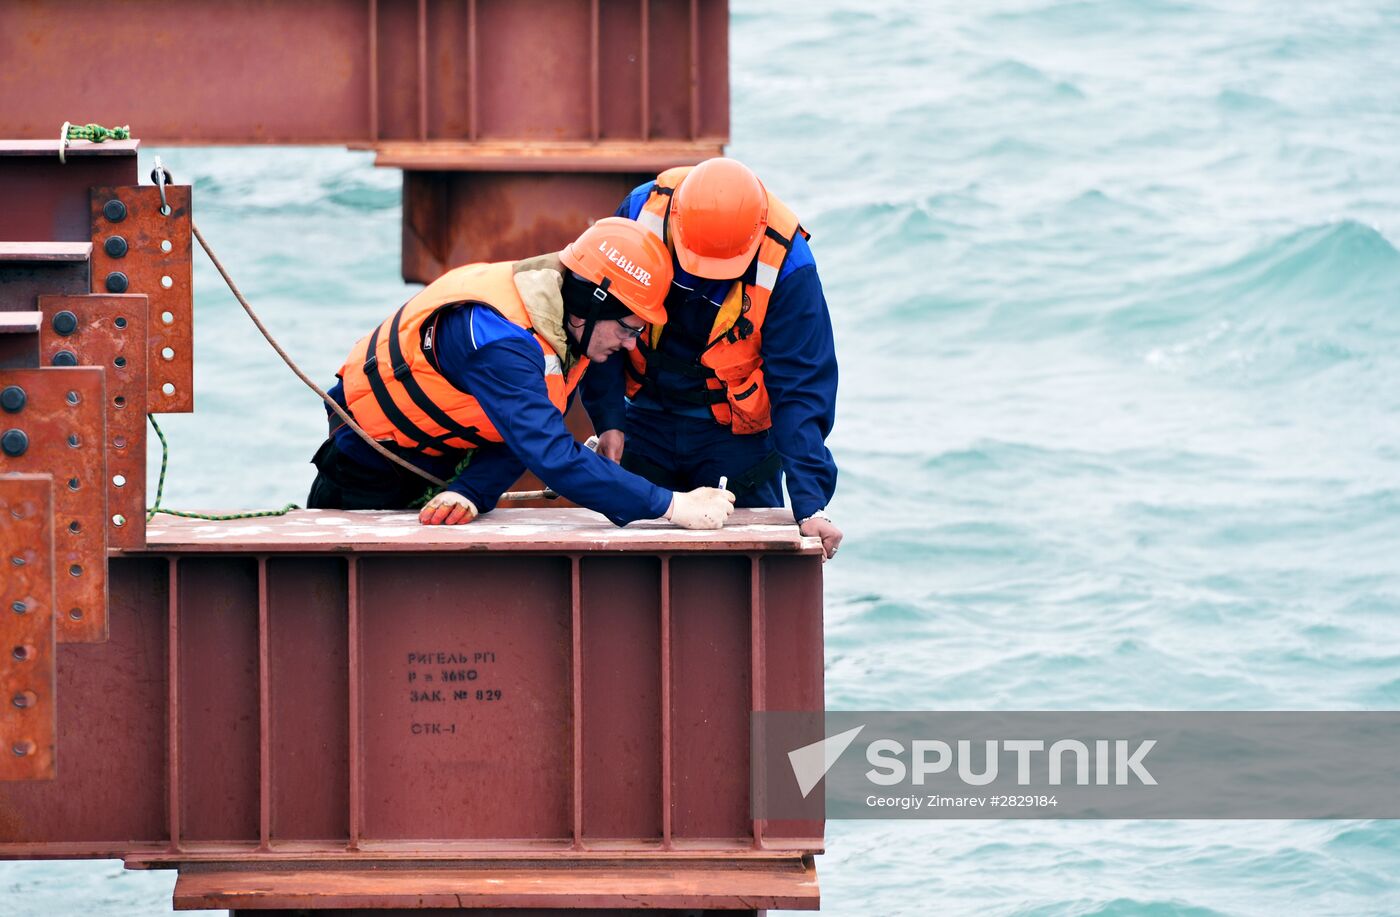 Construction of Kerch Strait Bridge in Crimea